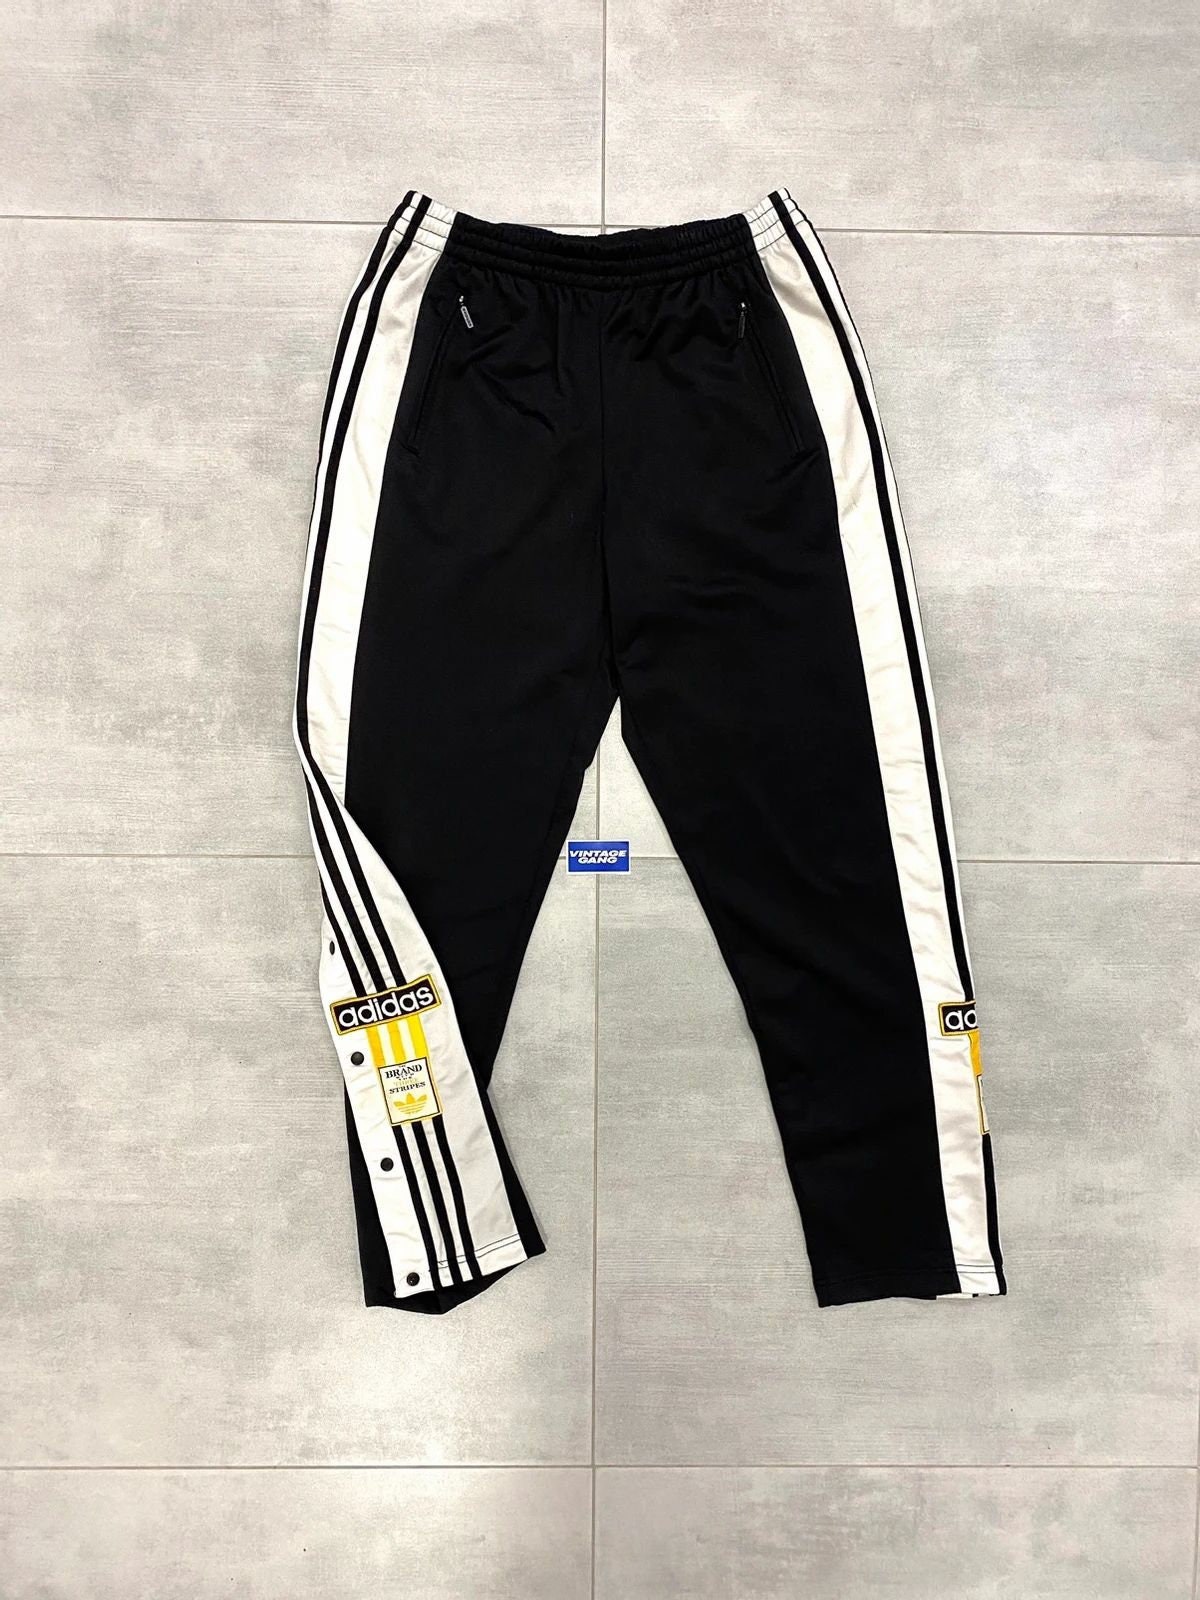 Adidas sweatpants the stripes brand vintage 90s Rare / nike / | Etsy